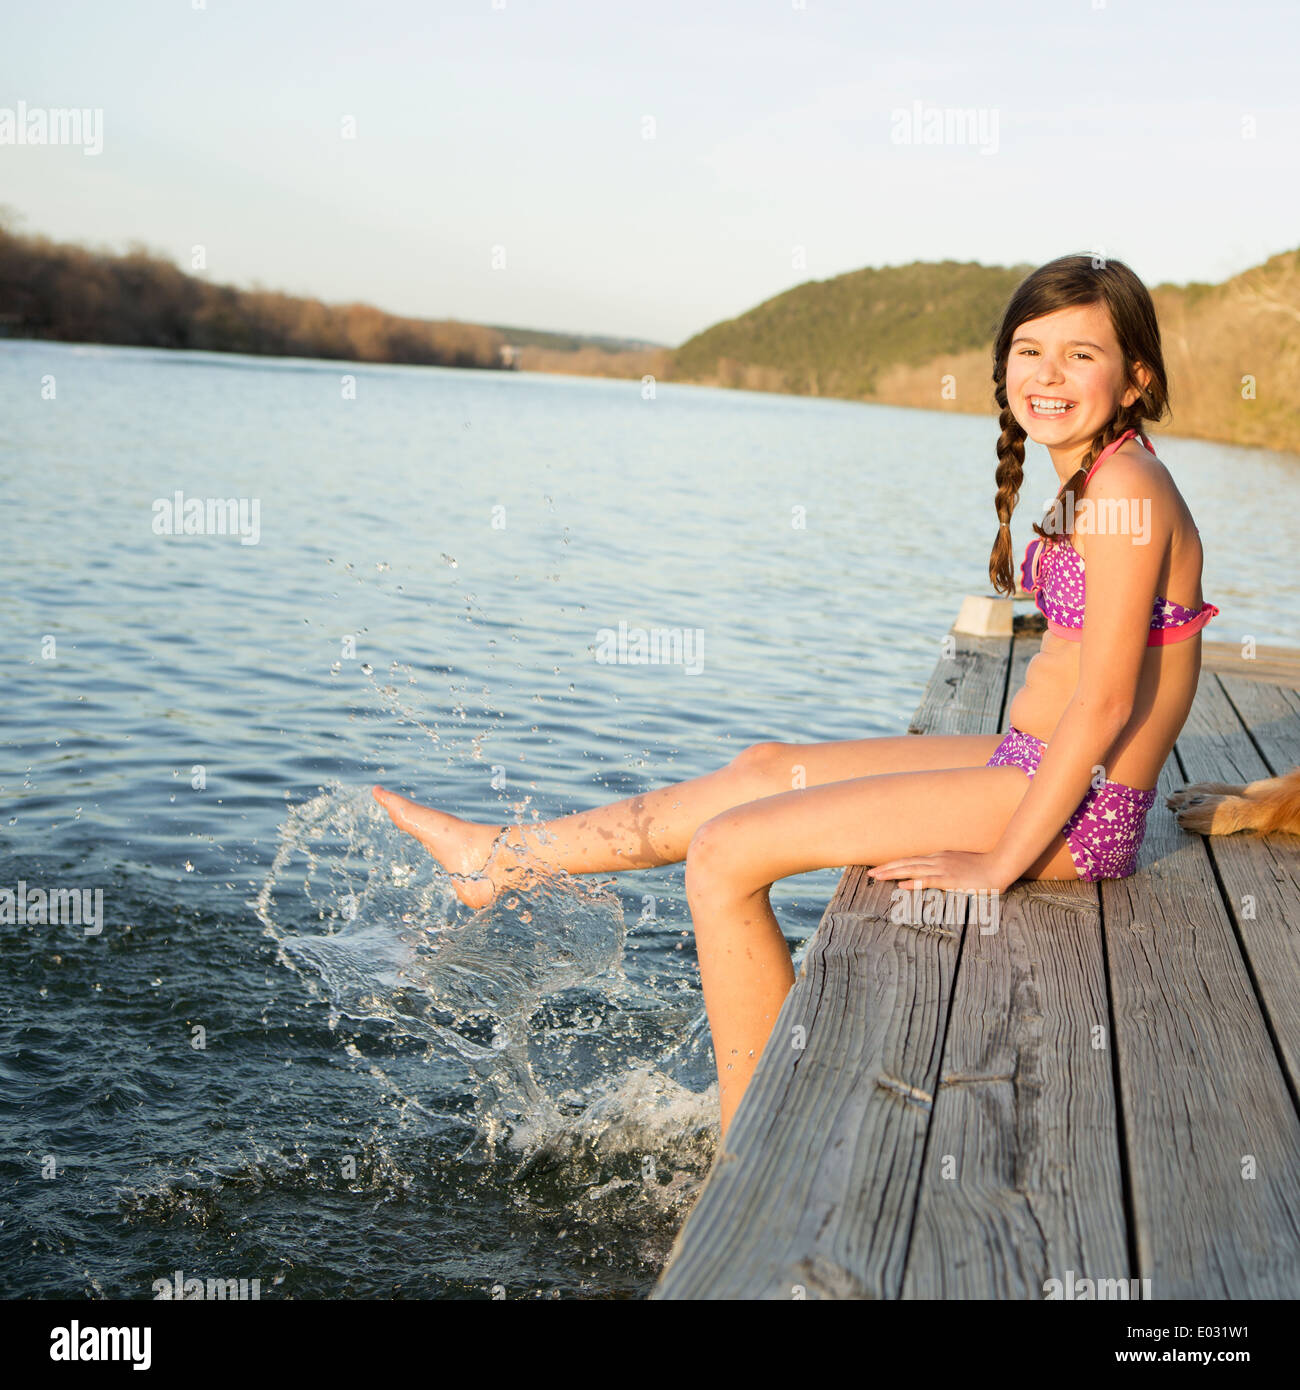 Child girl bikini hi-res stock photography and images - Alamy